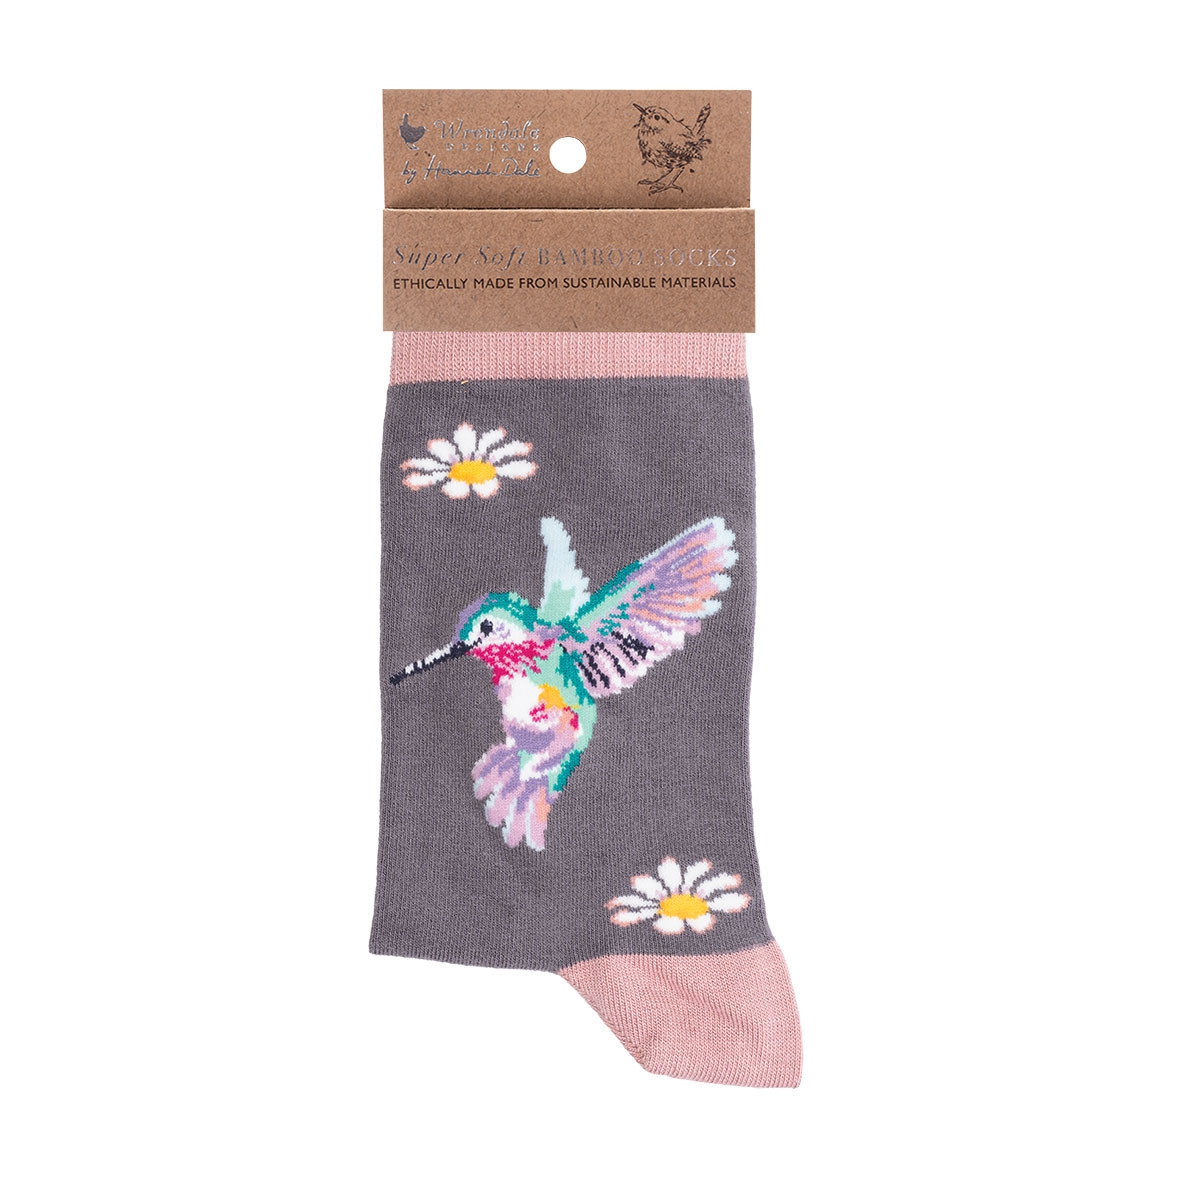 Kolibri Socken "Wisteria Wishes" Damengrösse Wrendale Designs